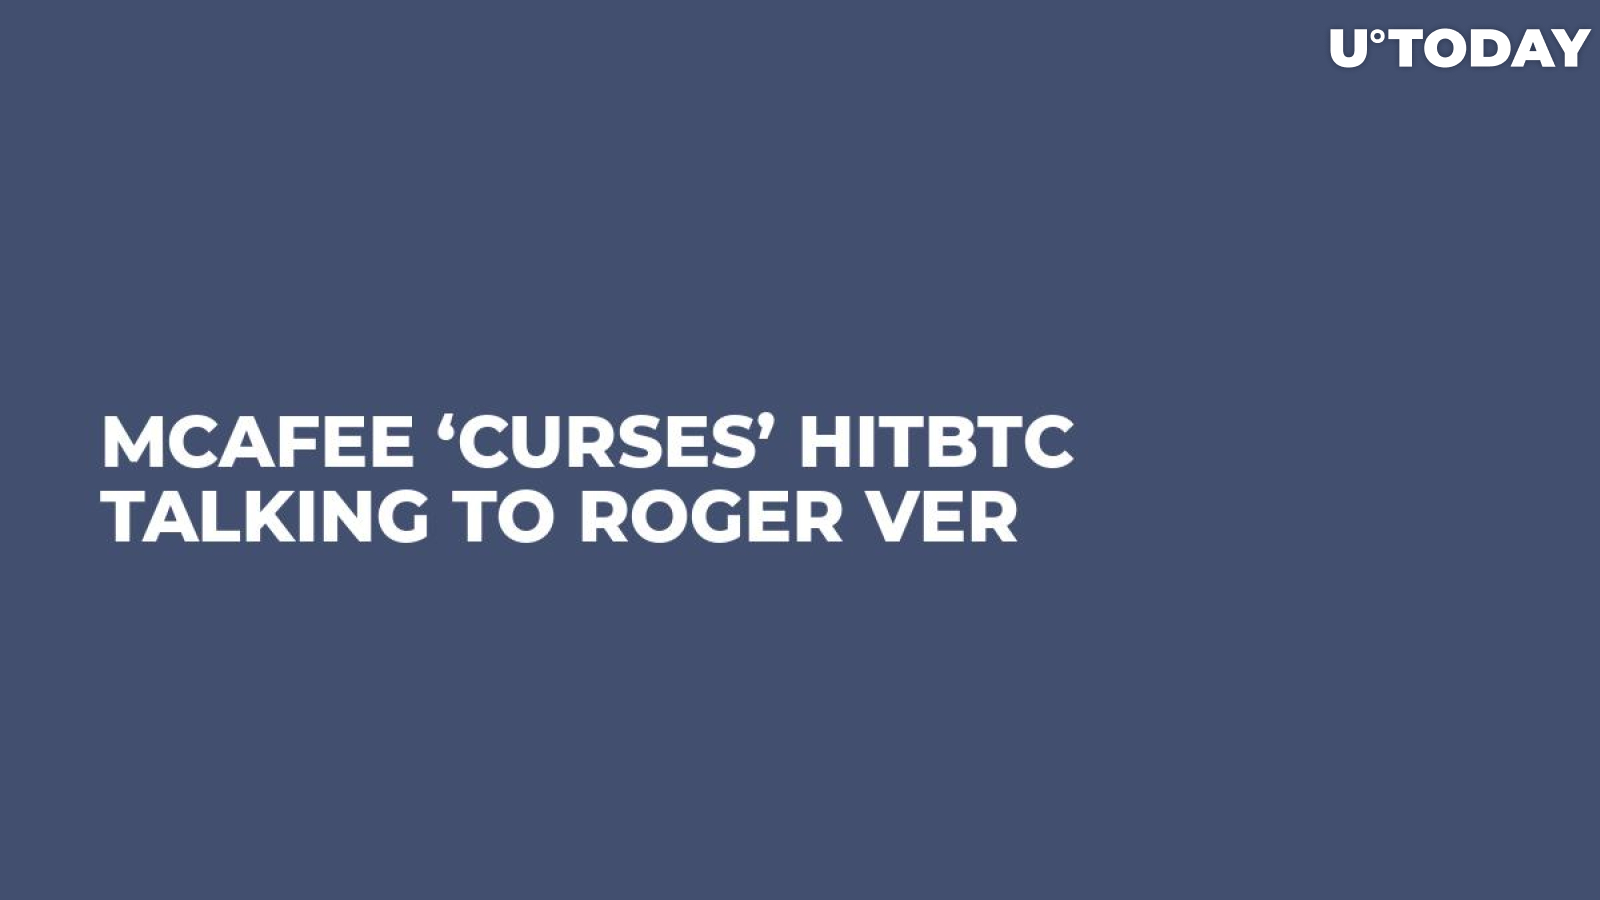 McAfee ‘Curses’ HitBTC Talking to Roger Ver